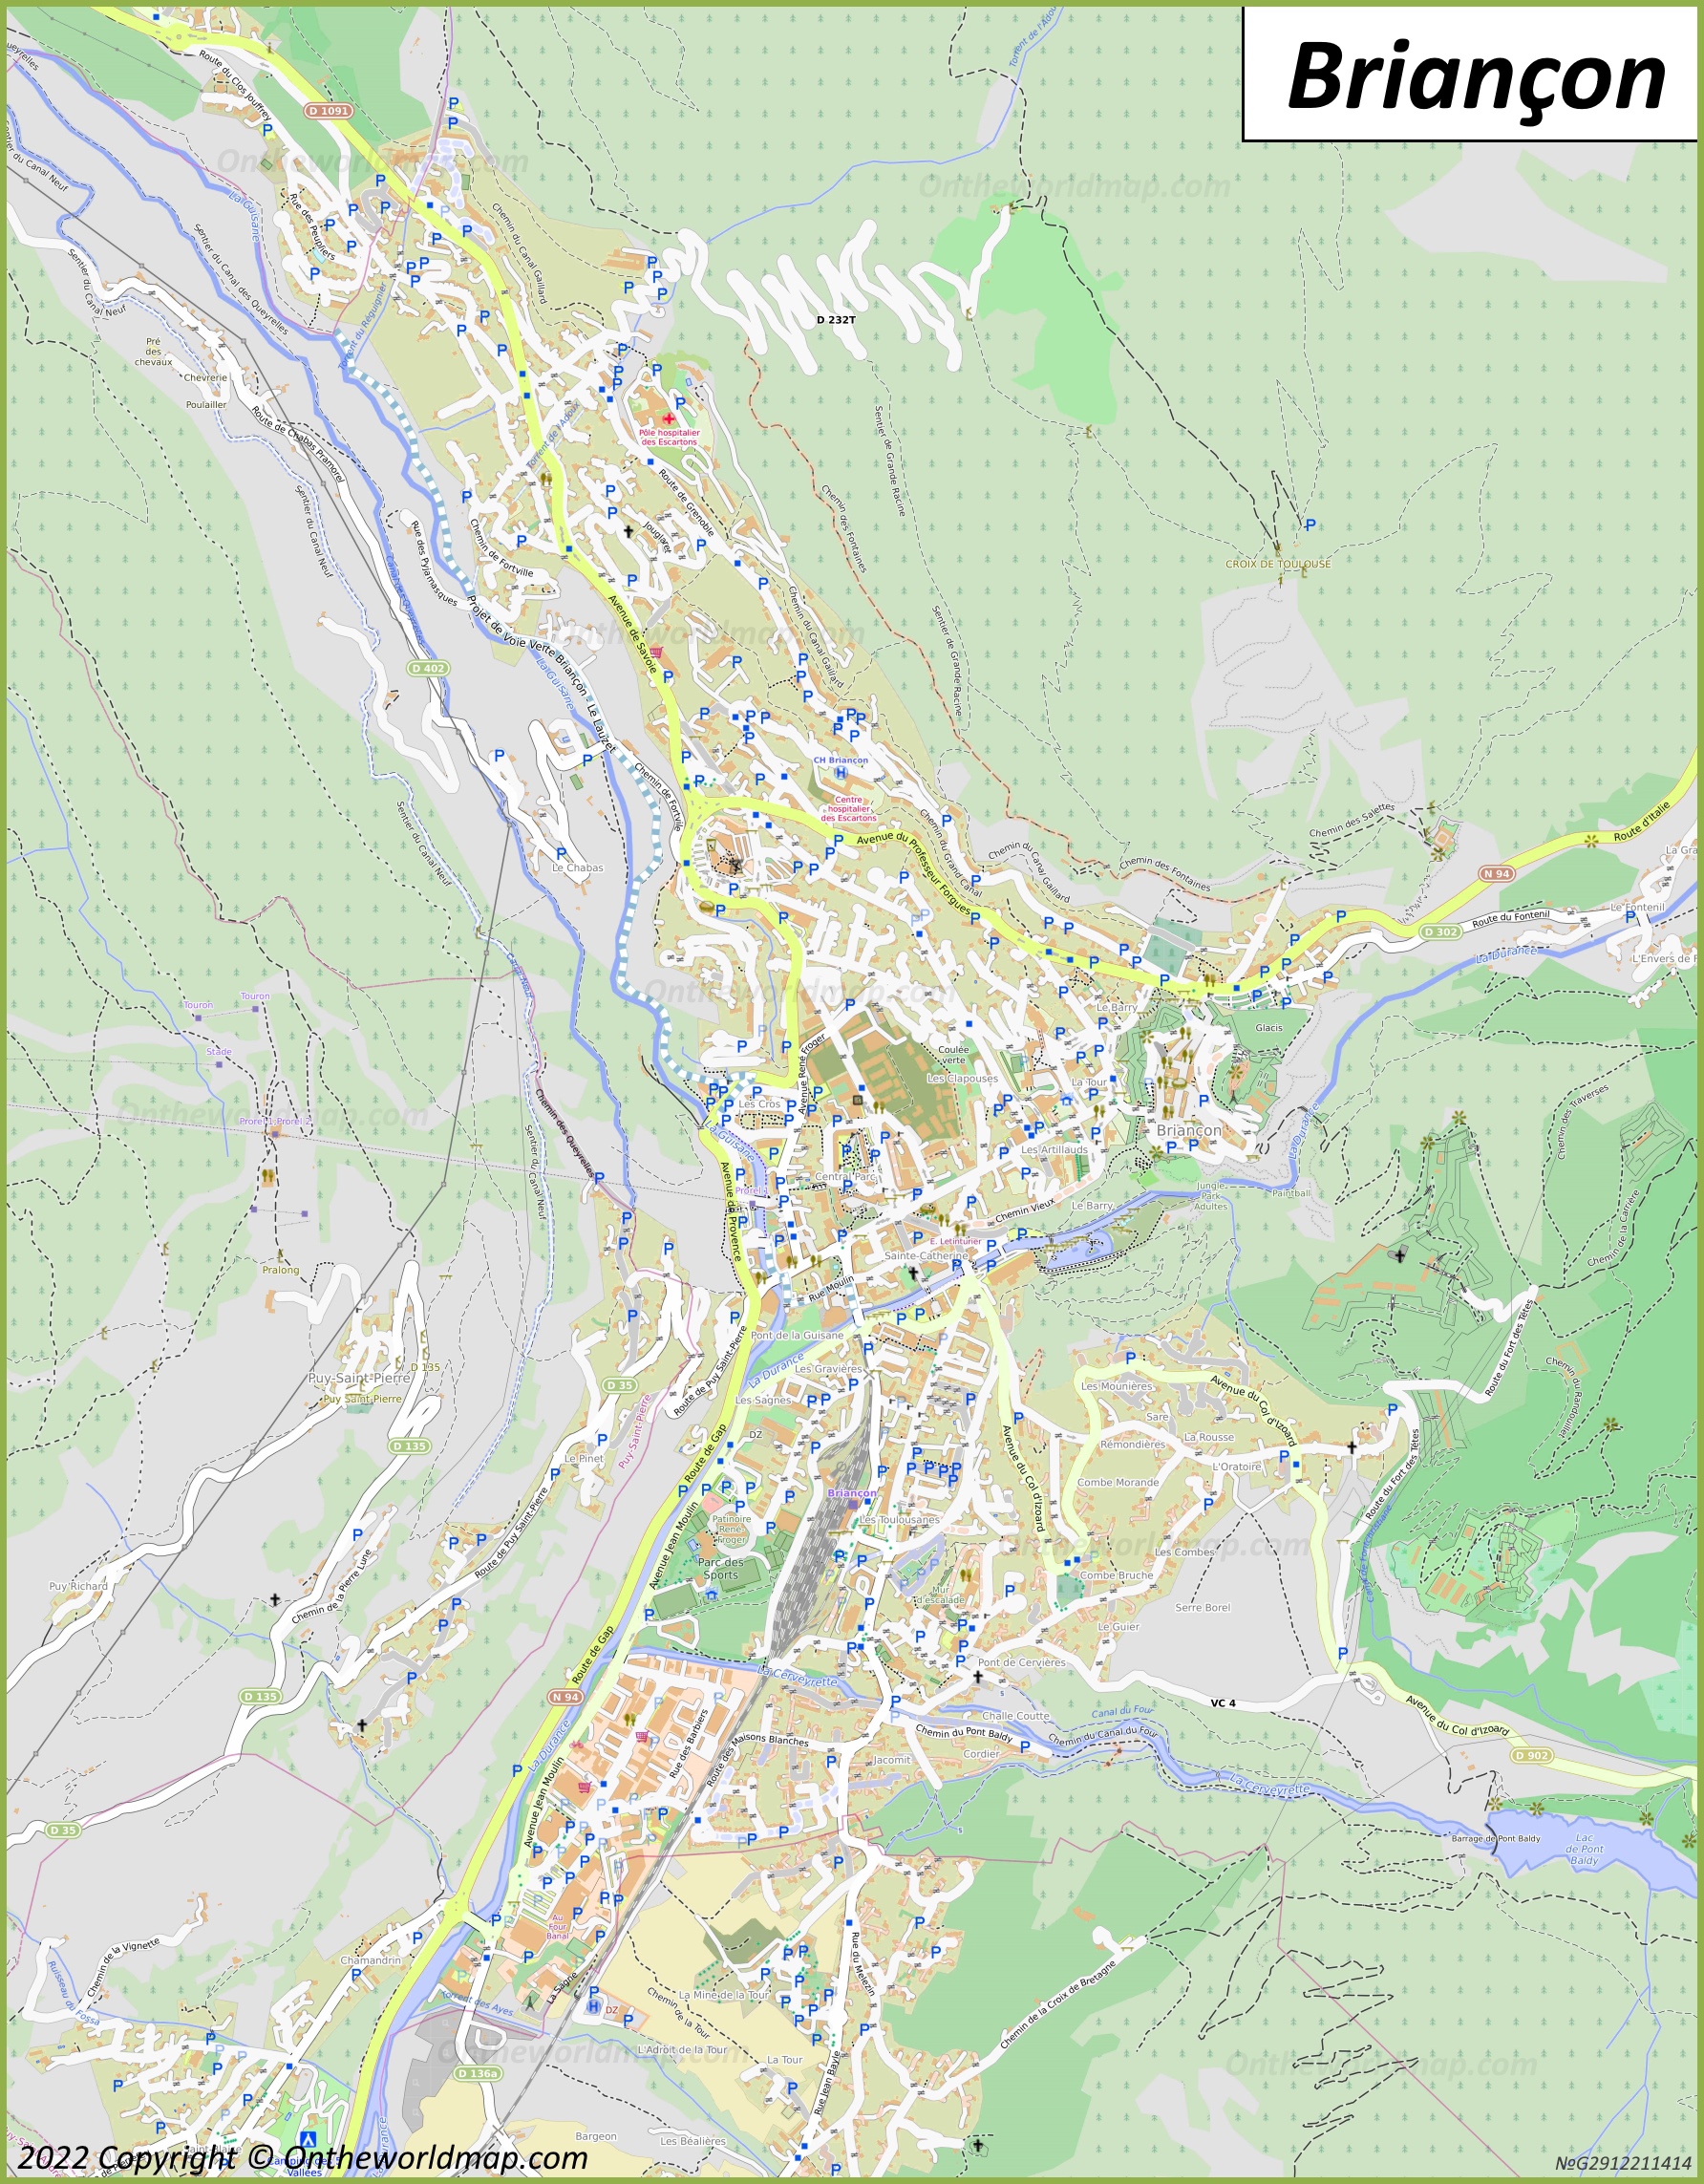 Map of Briançon